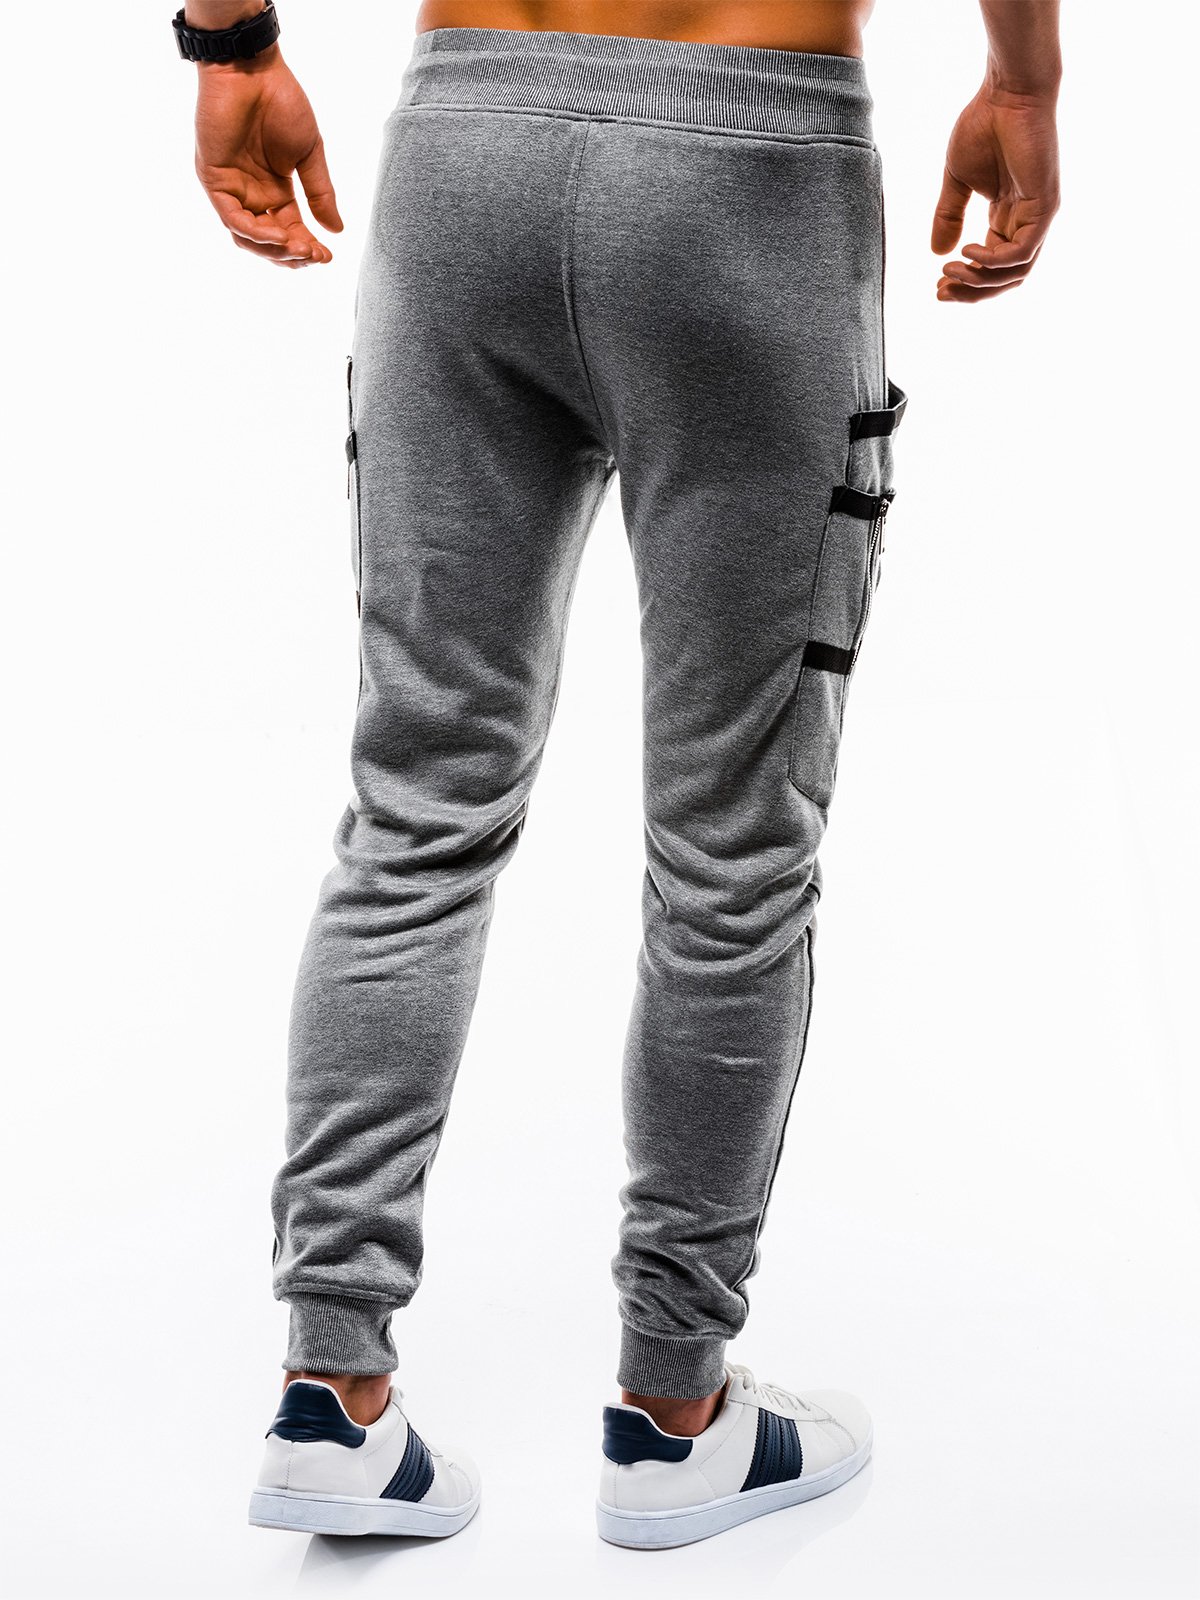 Men's sweatpants P739 - dark grey | MODONE wholesale - Clothing For Men